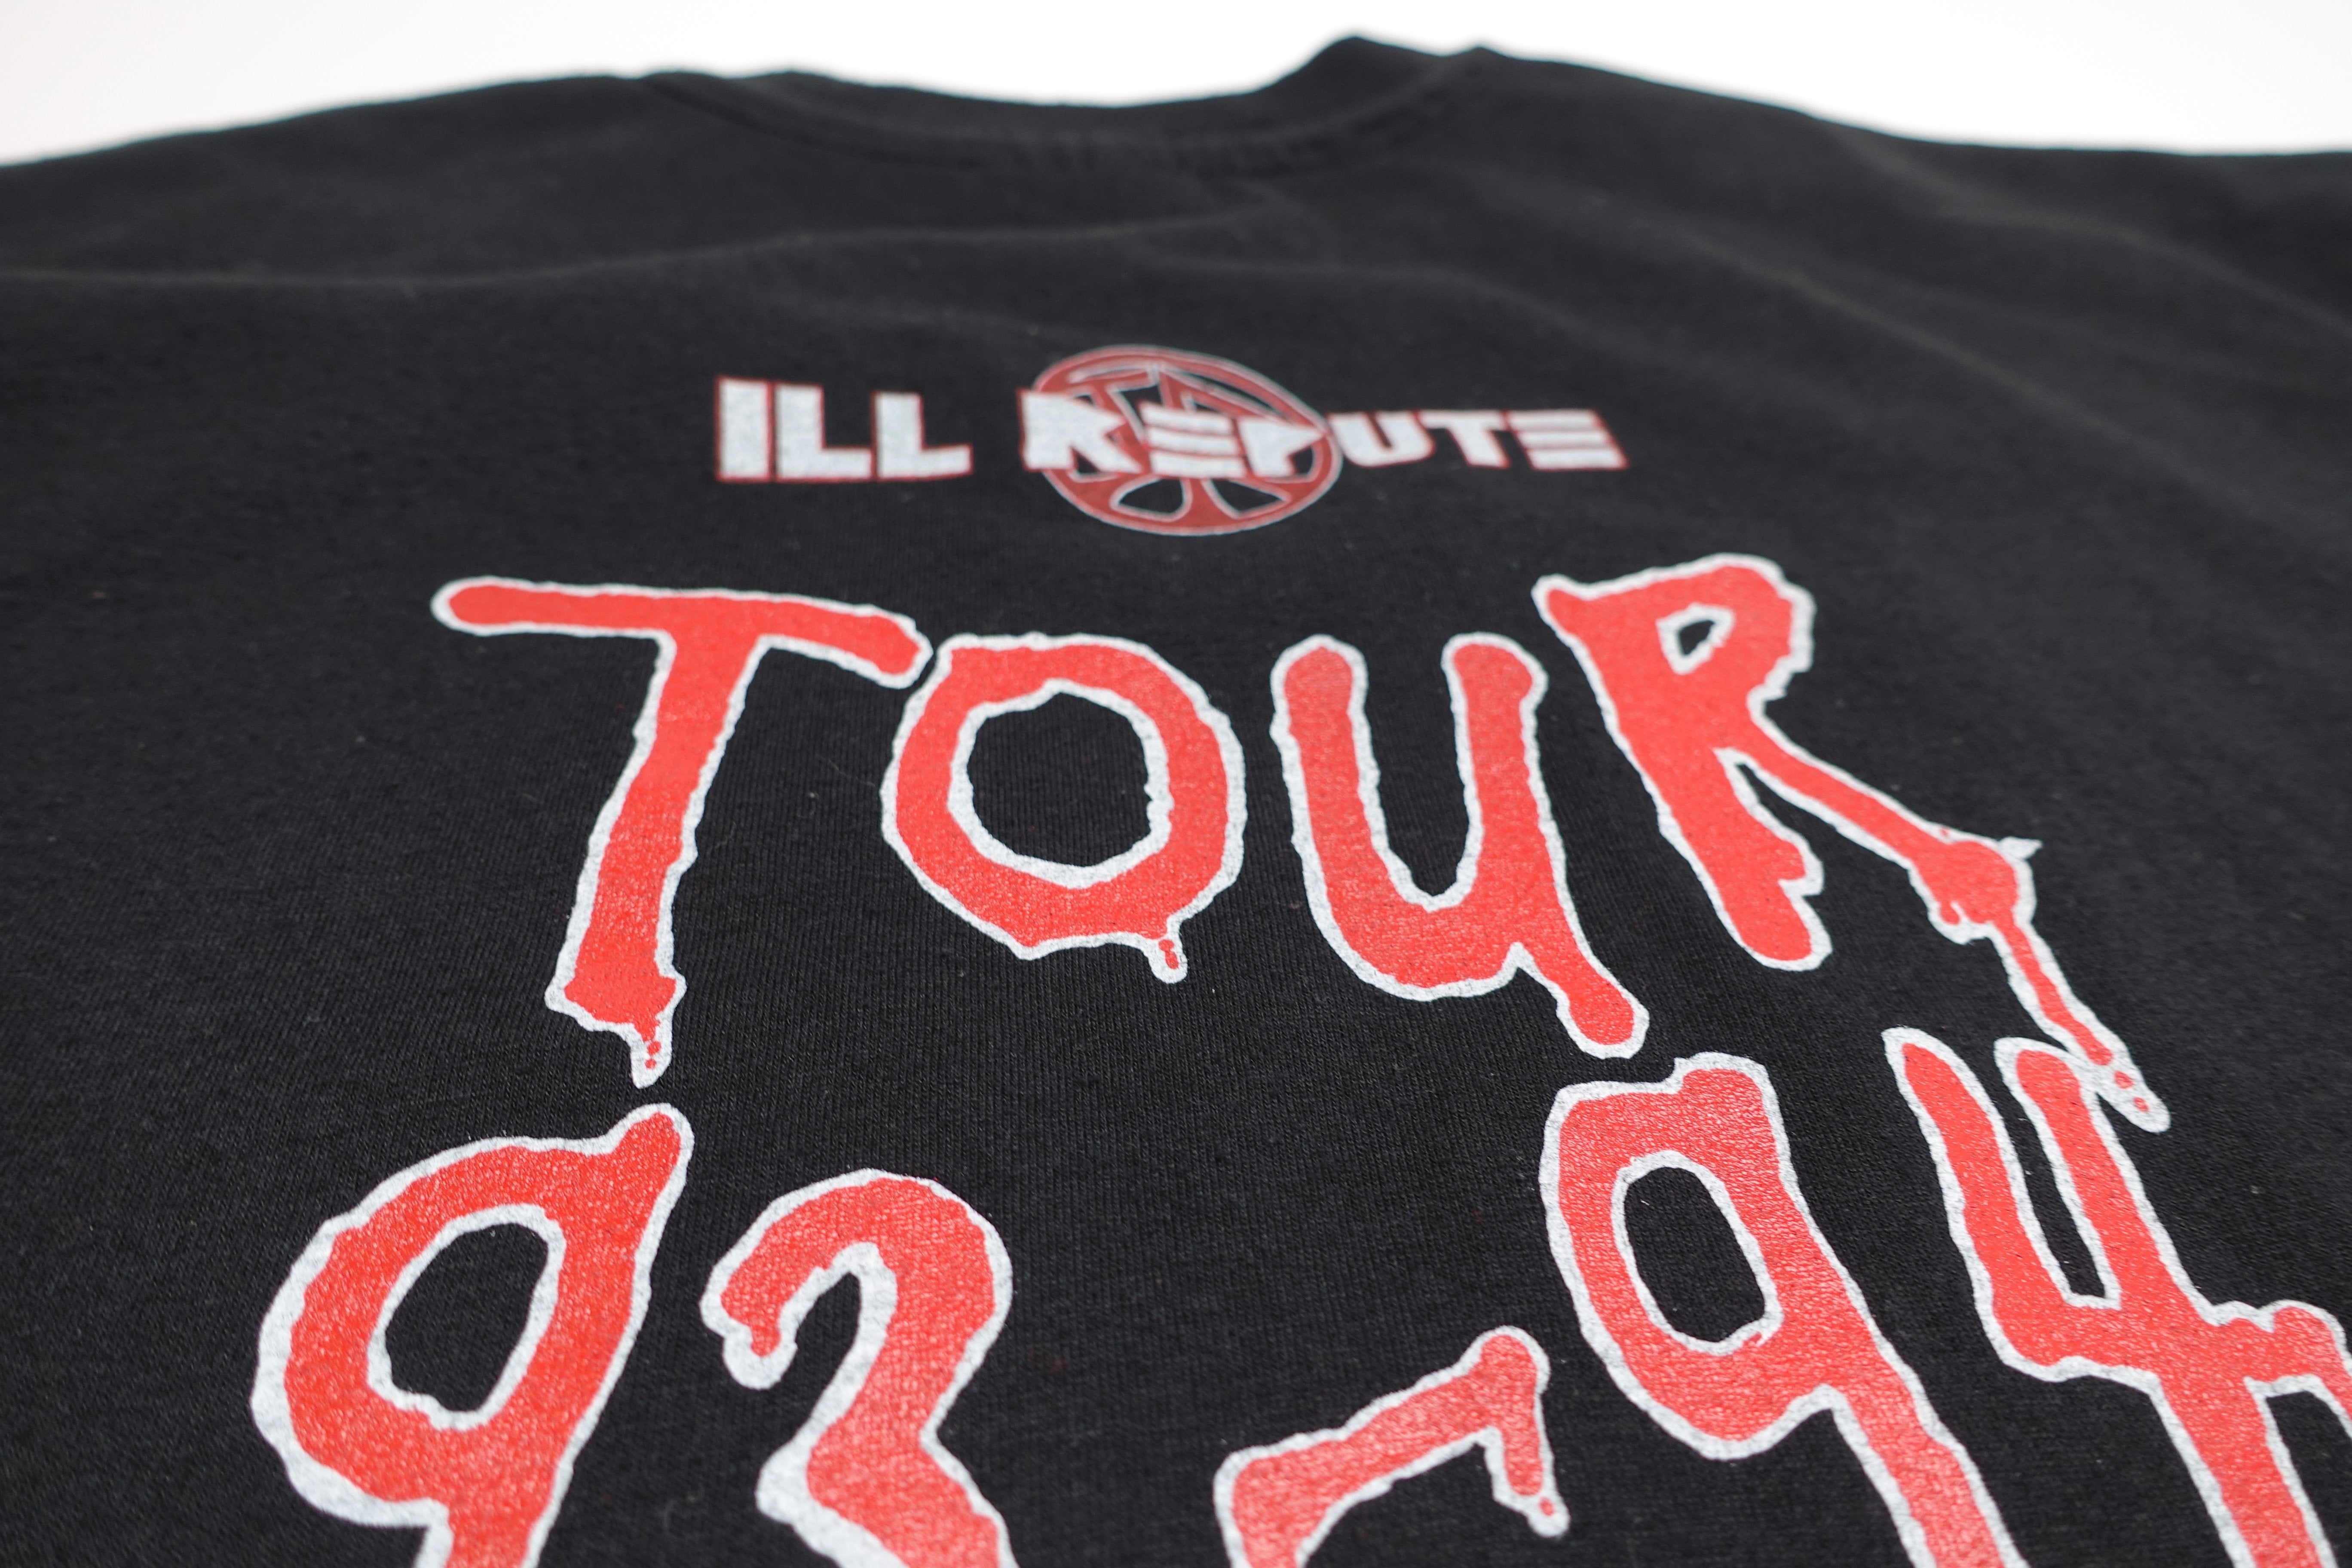 Ill Repute – Big Rusty Balls 1993-94 Tour Shirt Size XL